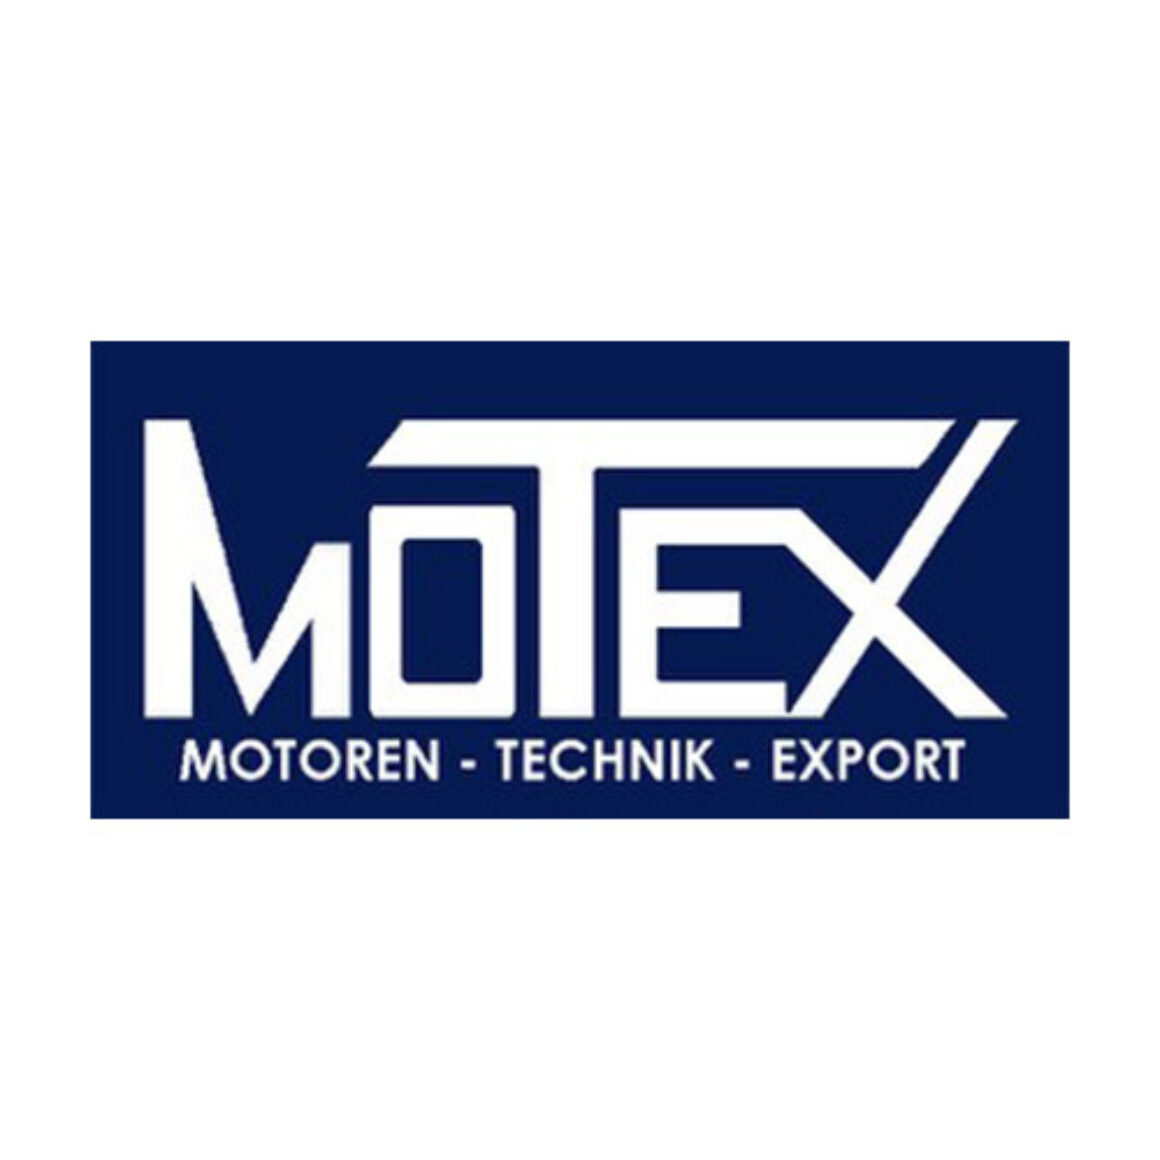 Motex 1000x500